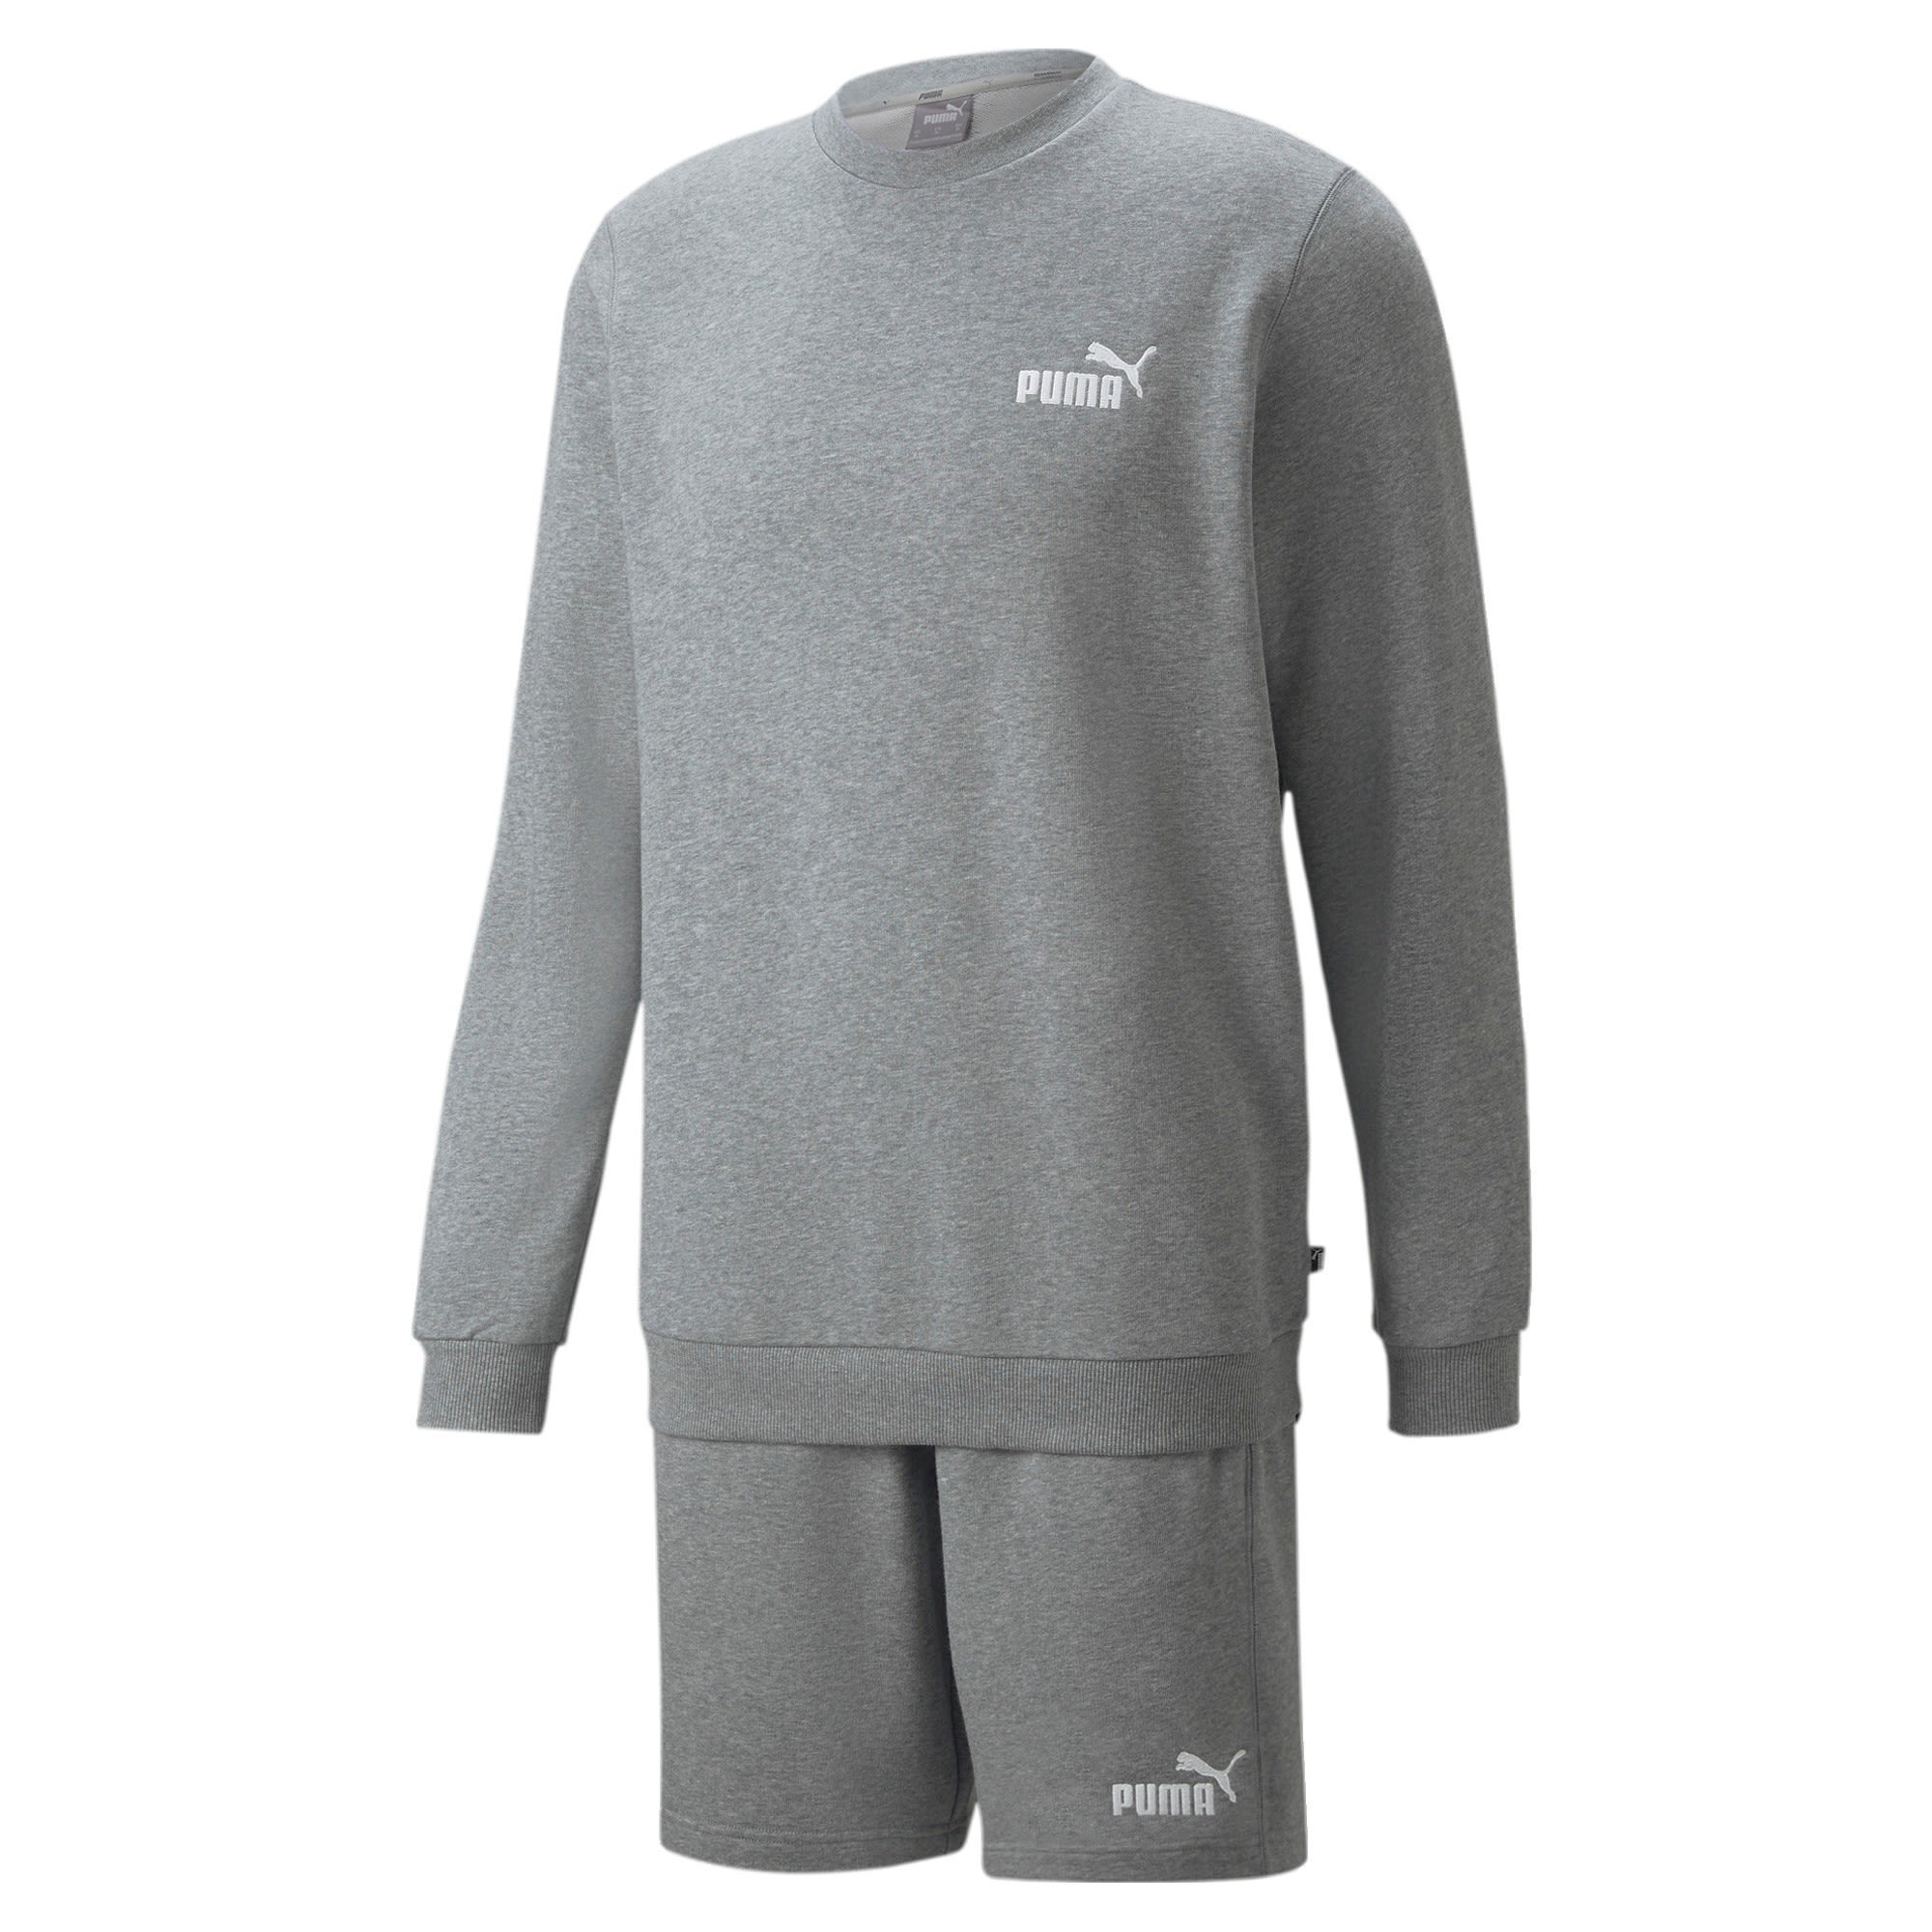 Puma Feel Good Suit Grau- Male Freizeitpullover- Grsse S - Farbe Medium Gray Heather